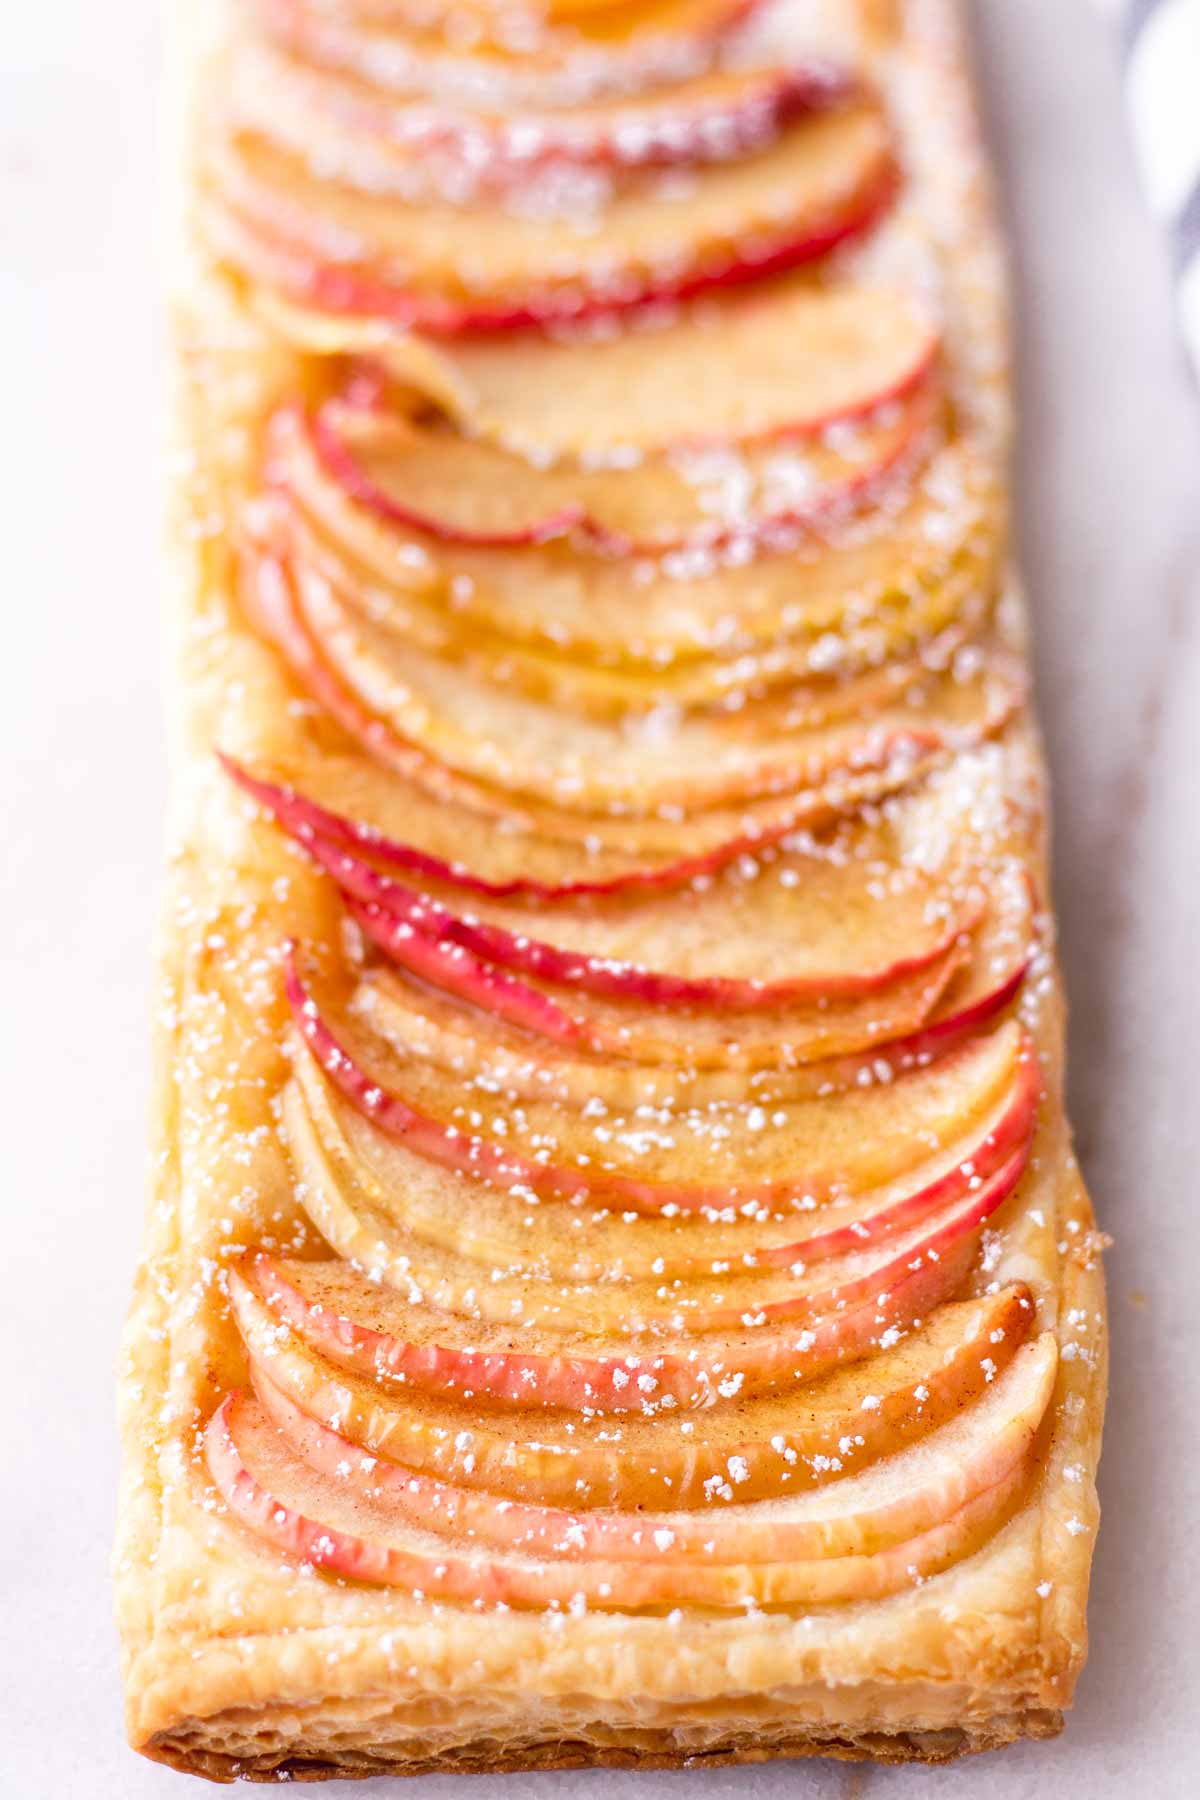 side view of arranged baked honeycrisp apple slices on top of crust